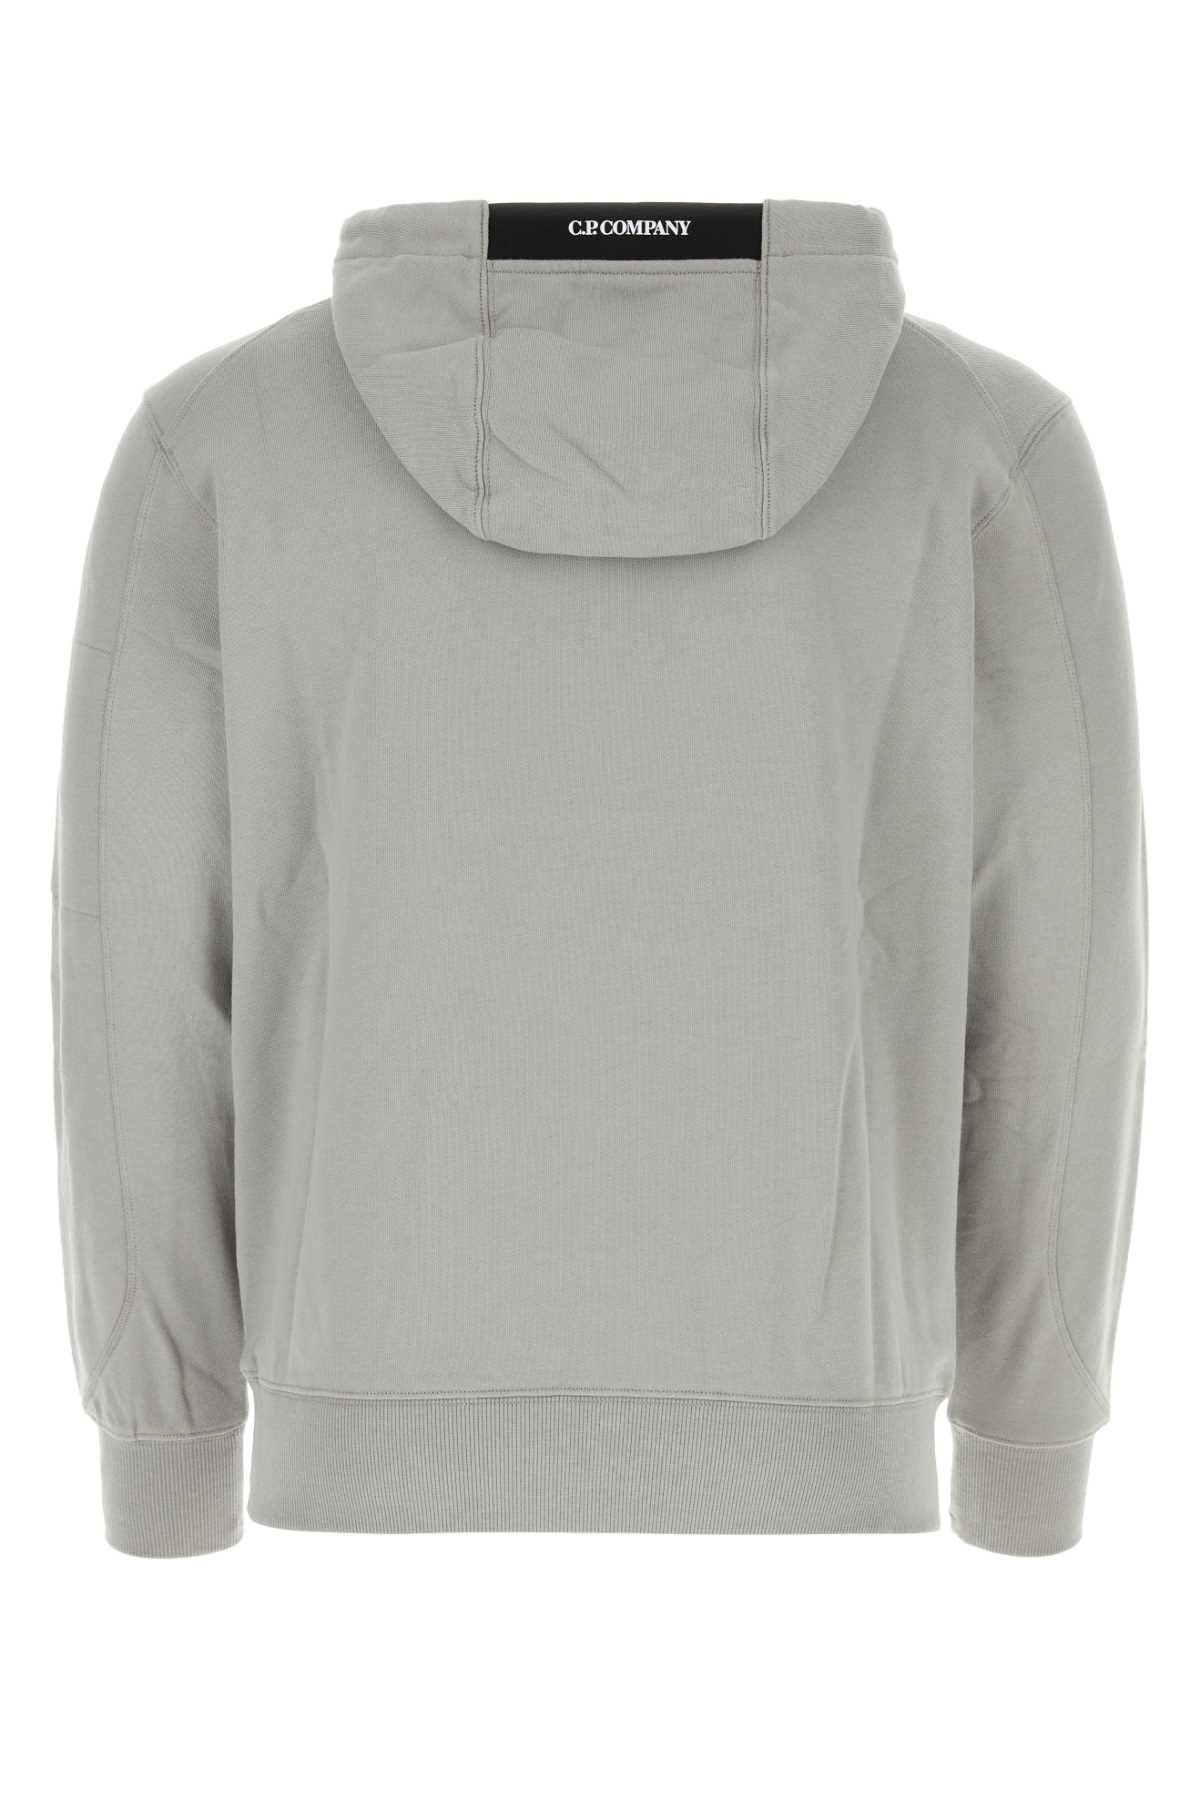 C.p. Company Grey Cotton Sweatshirt In Drizzle